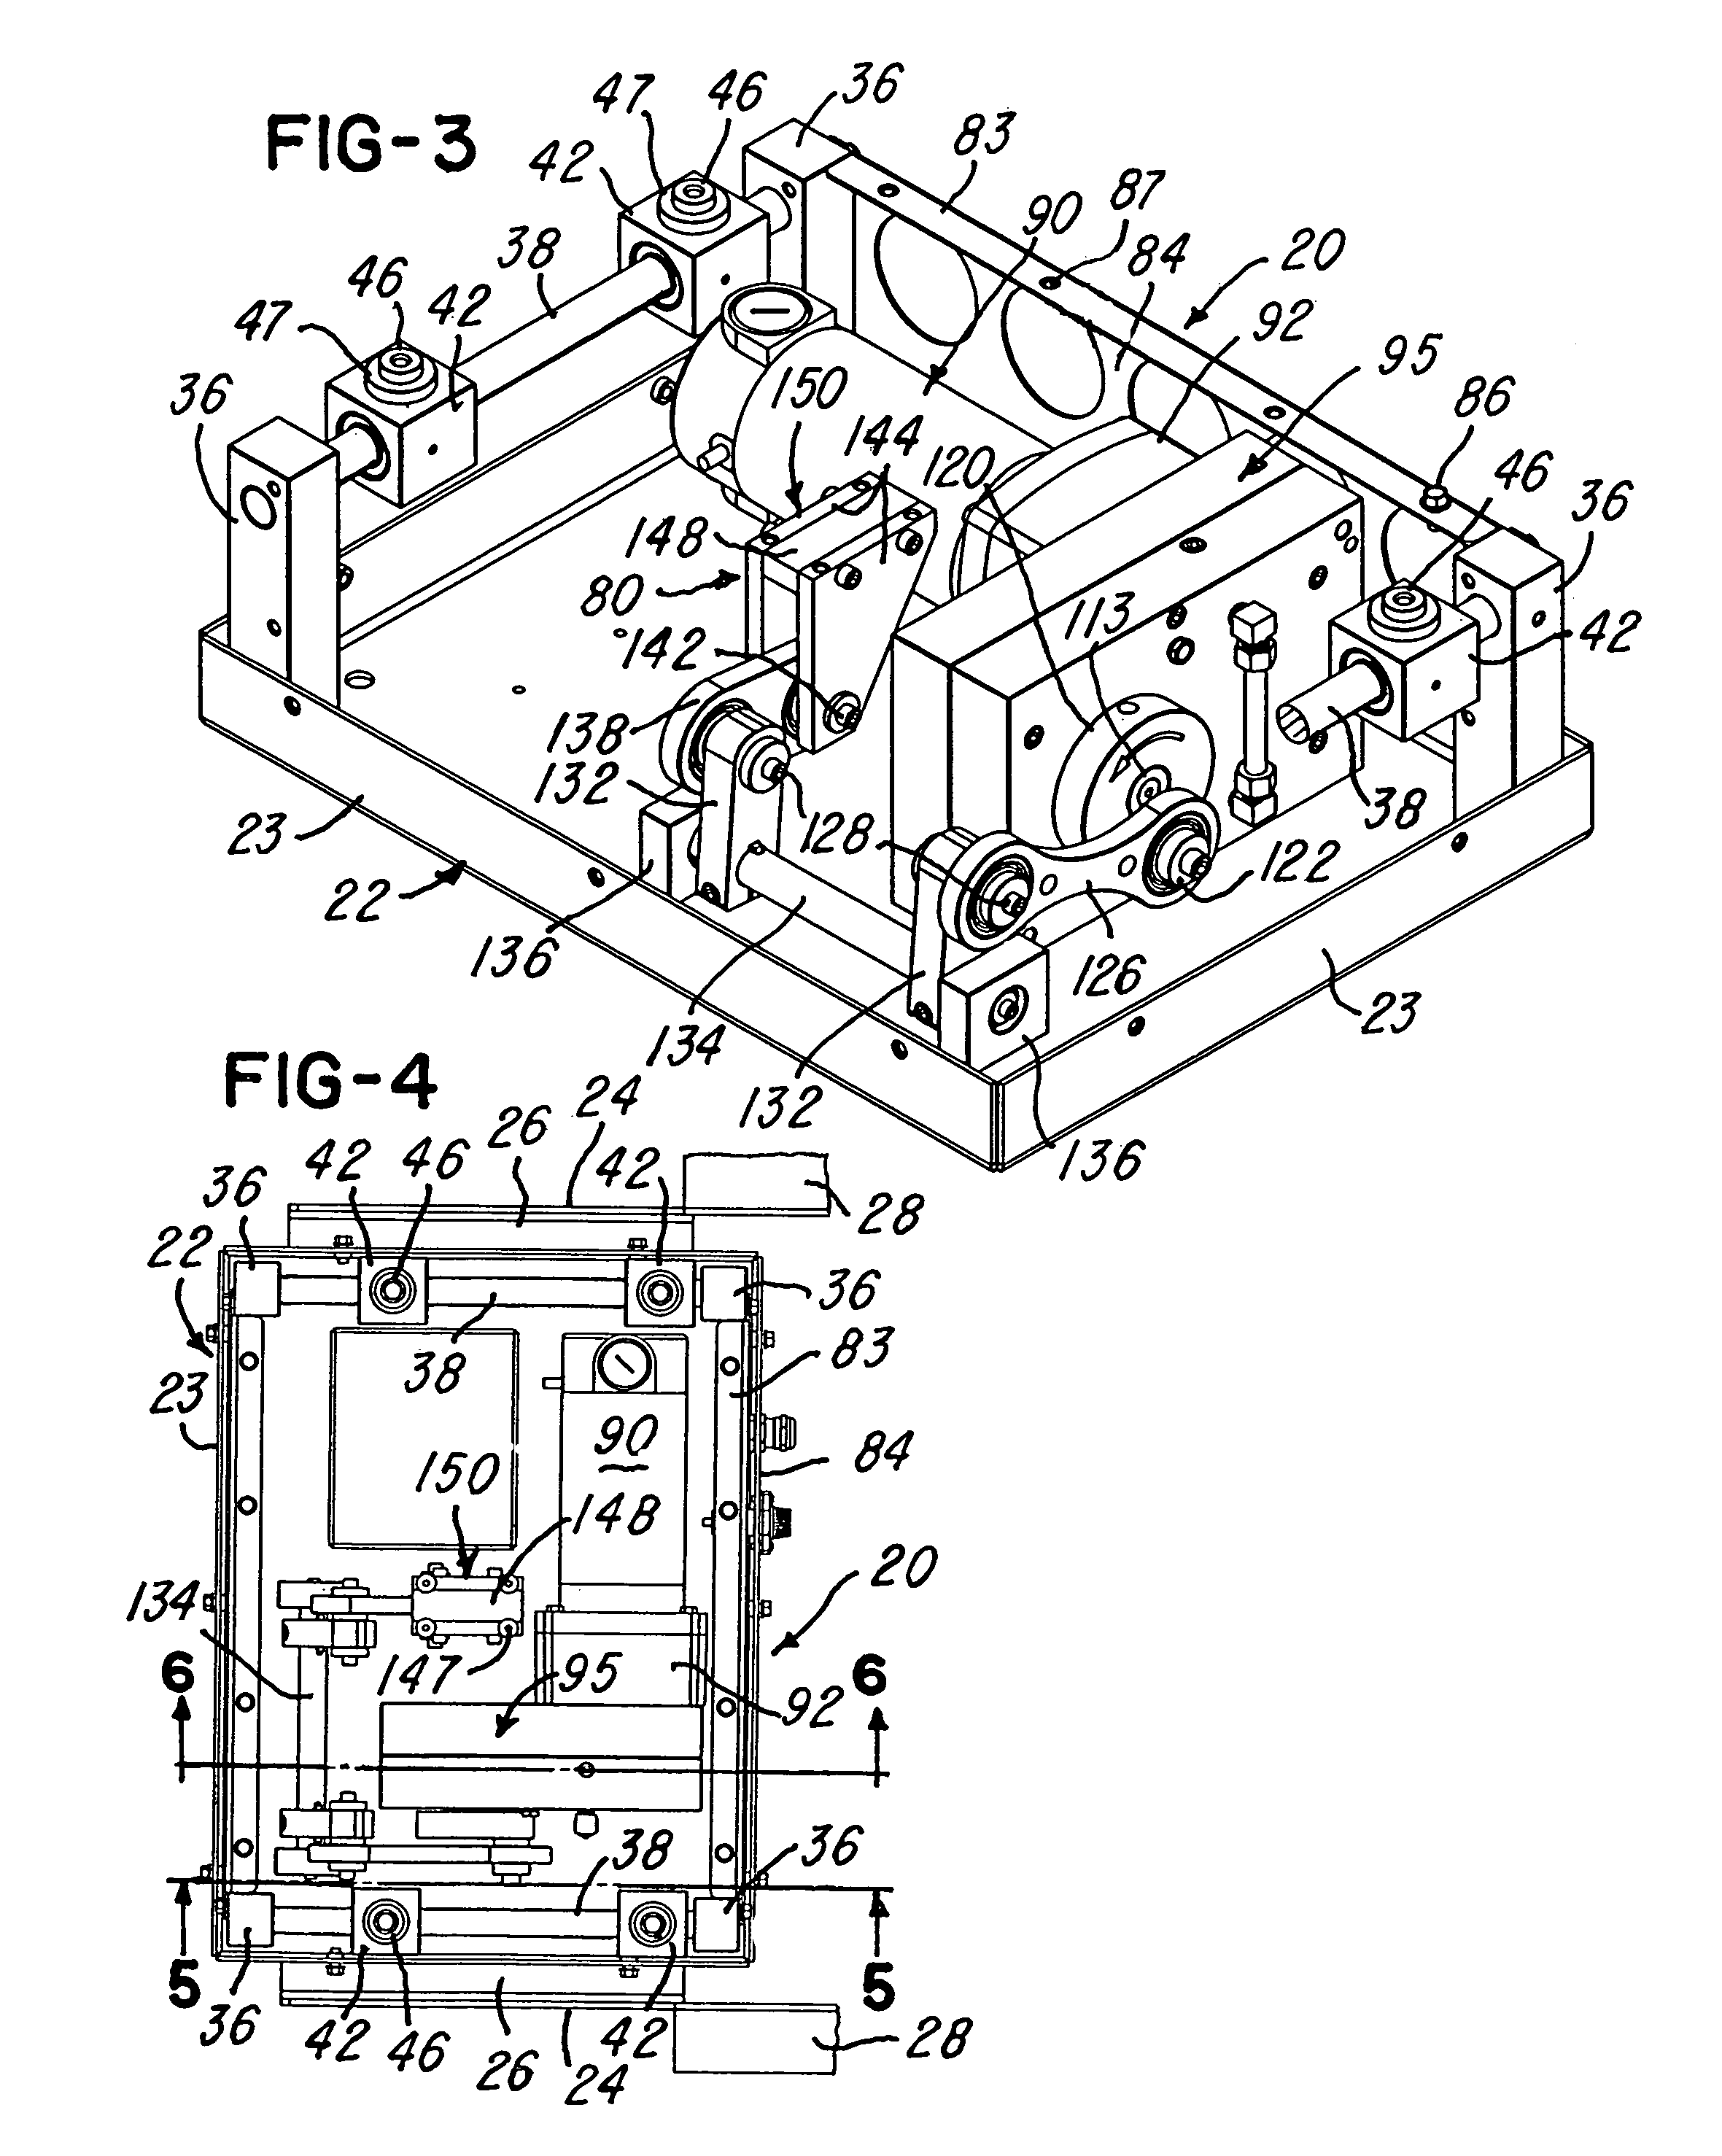 Shaker conveyor with elliptical gear drive system